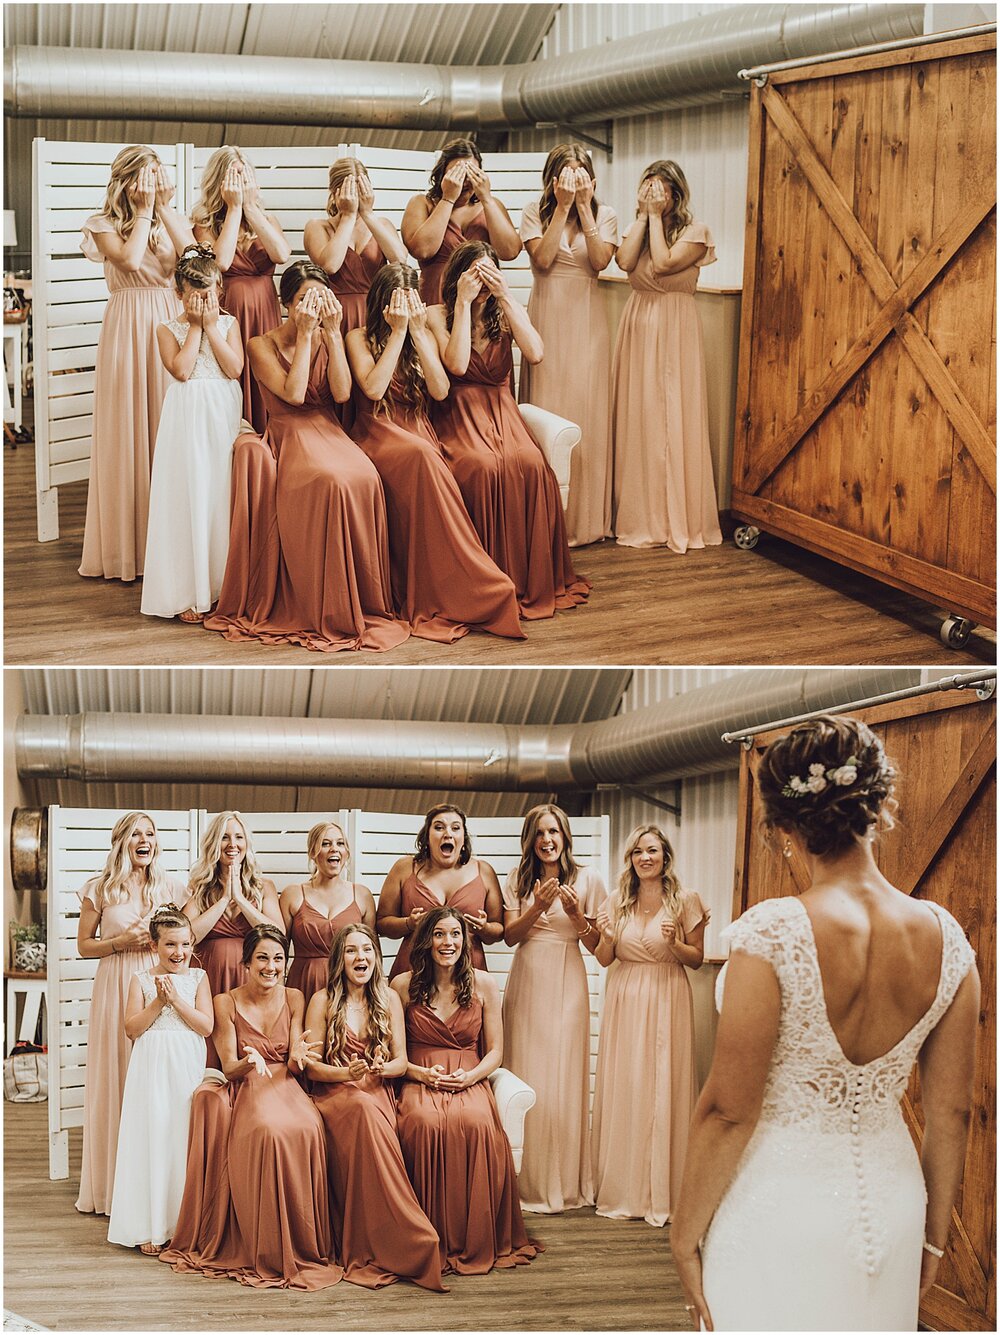  bride surprising her bridesmaids wearing her wedding dress 